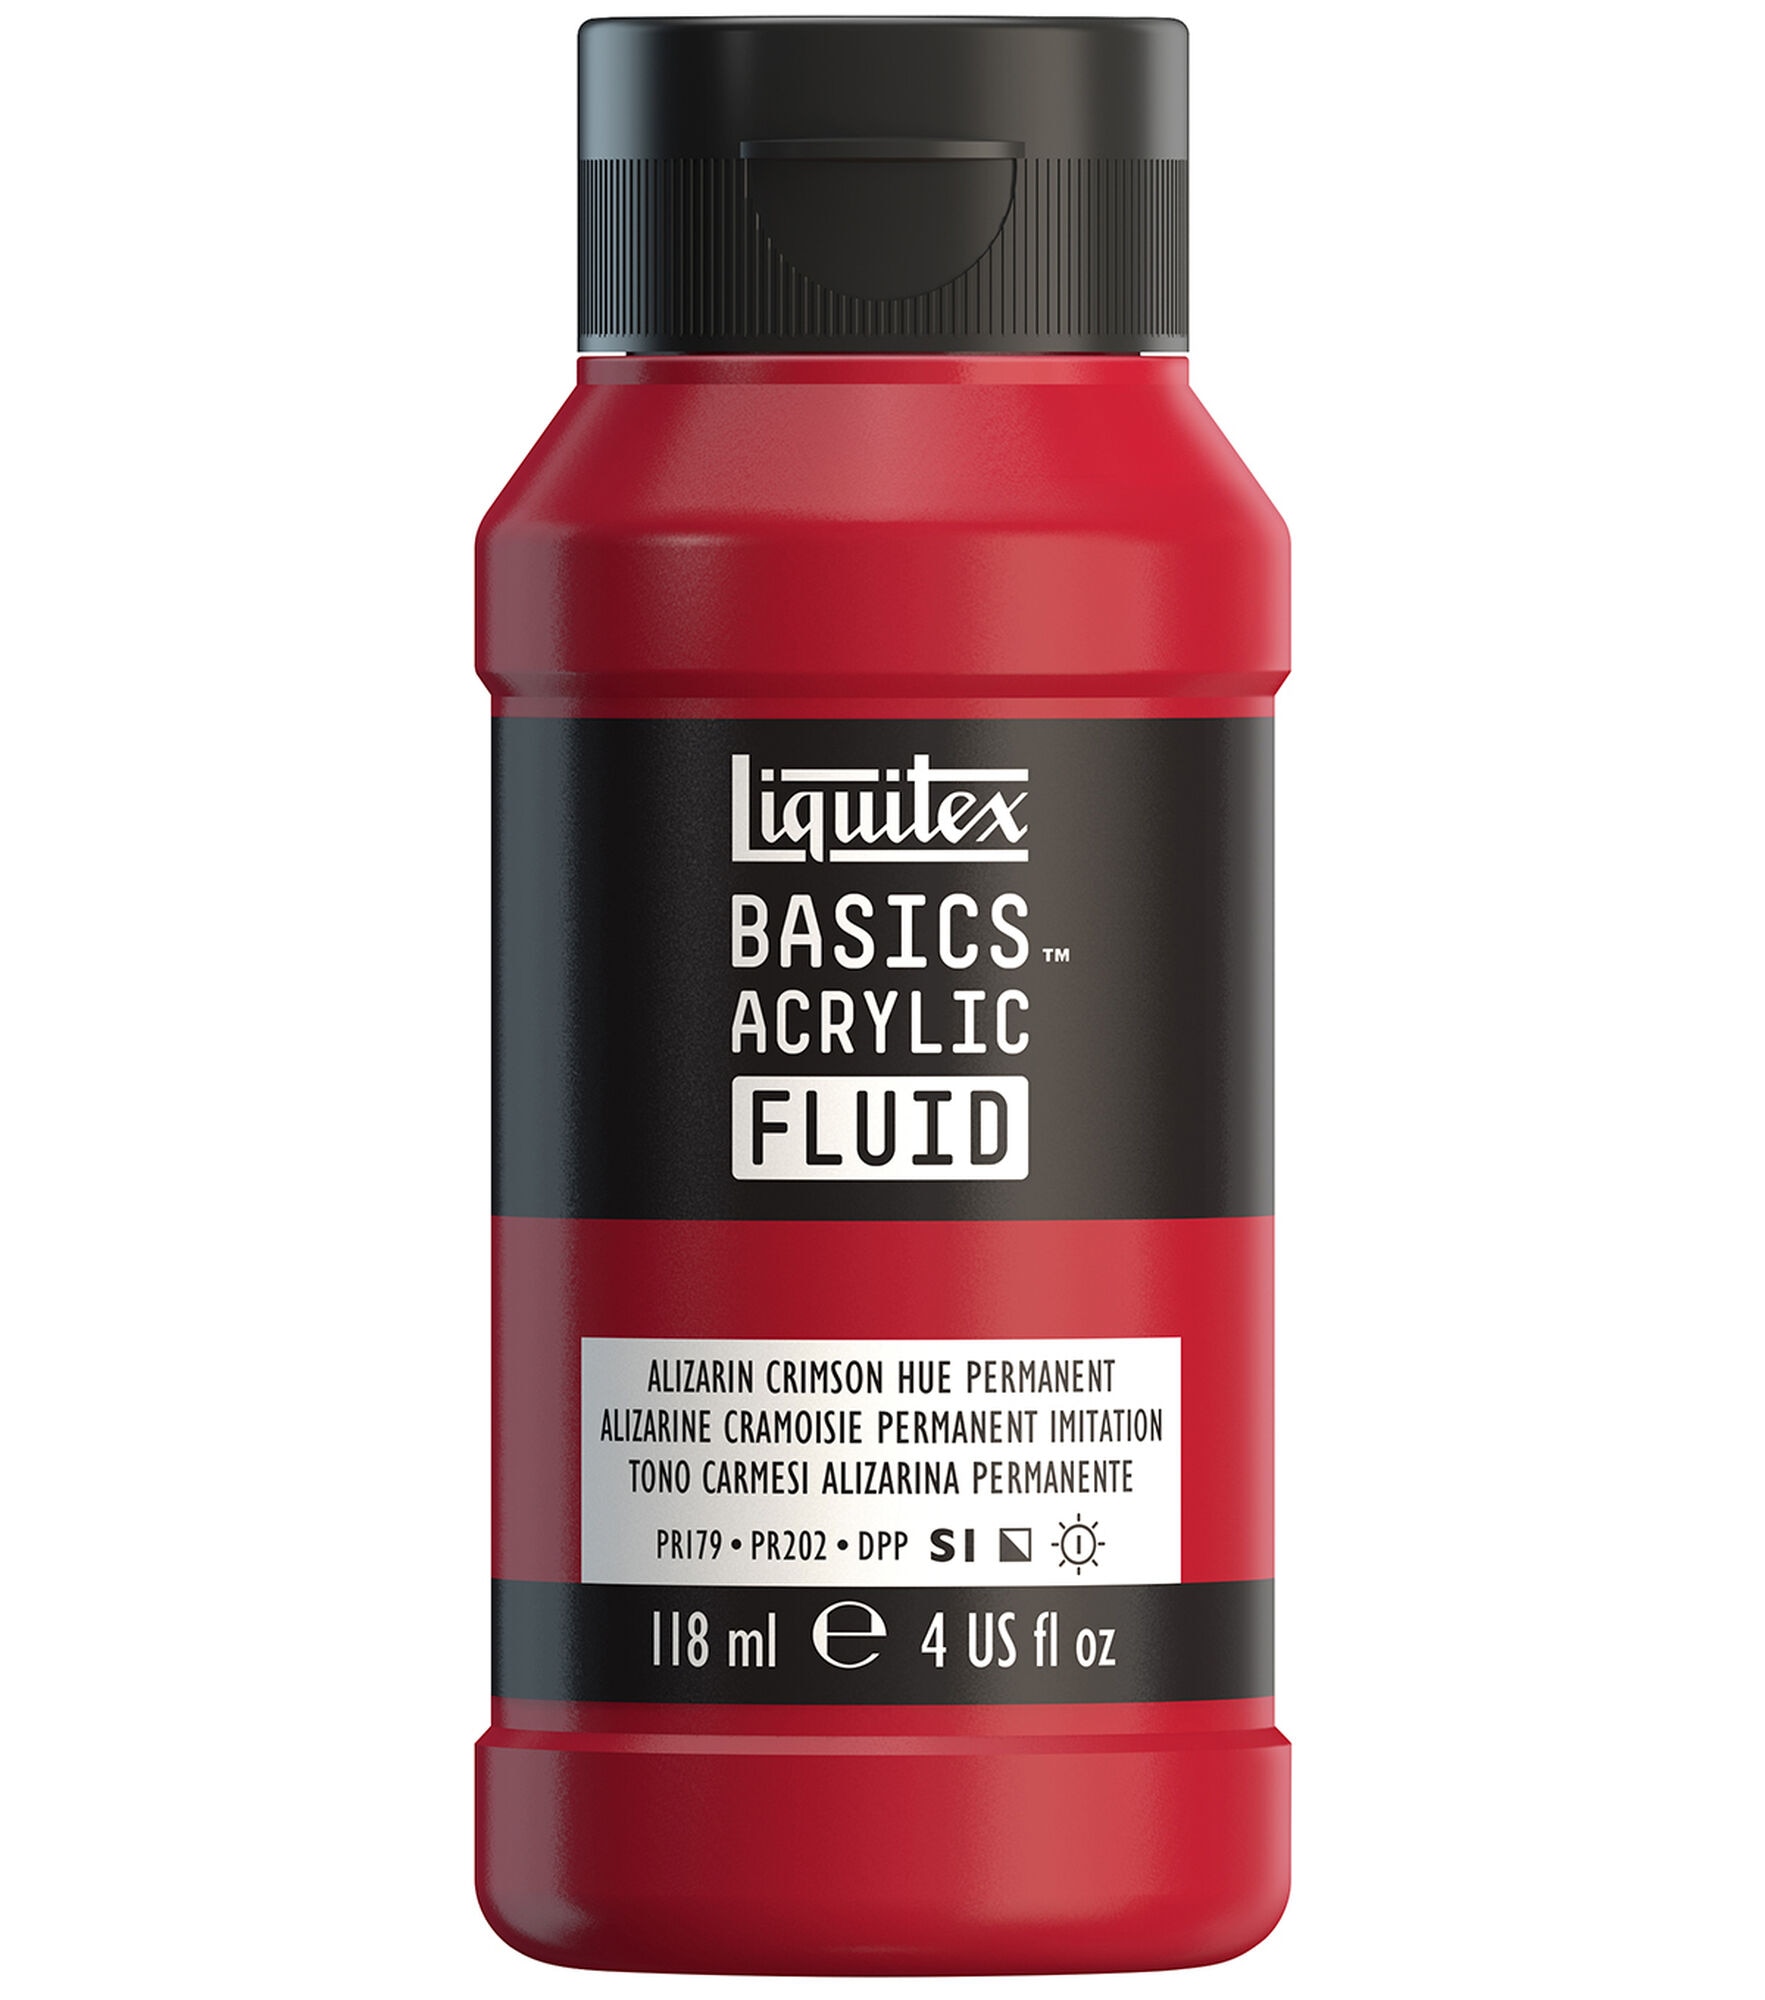 Liquitex Basics Acrylic Fluid Paint - Alizarin Crimson Hue Permanent, 118 ml